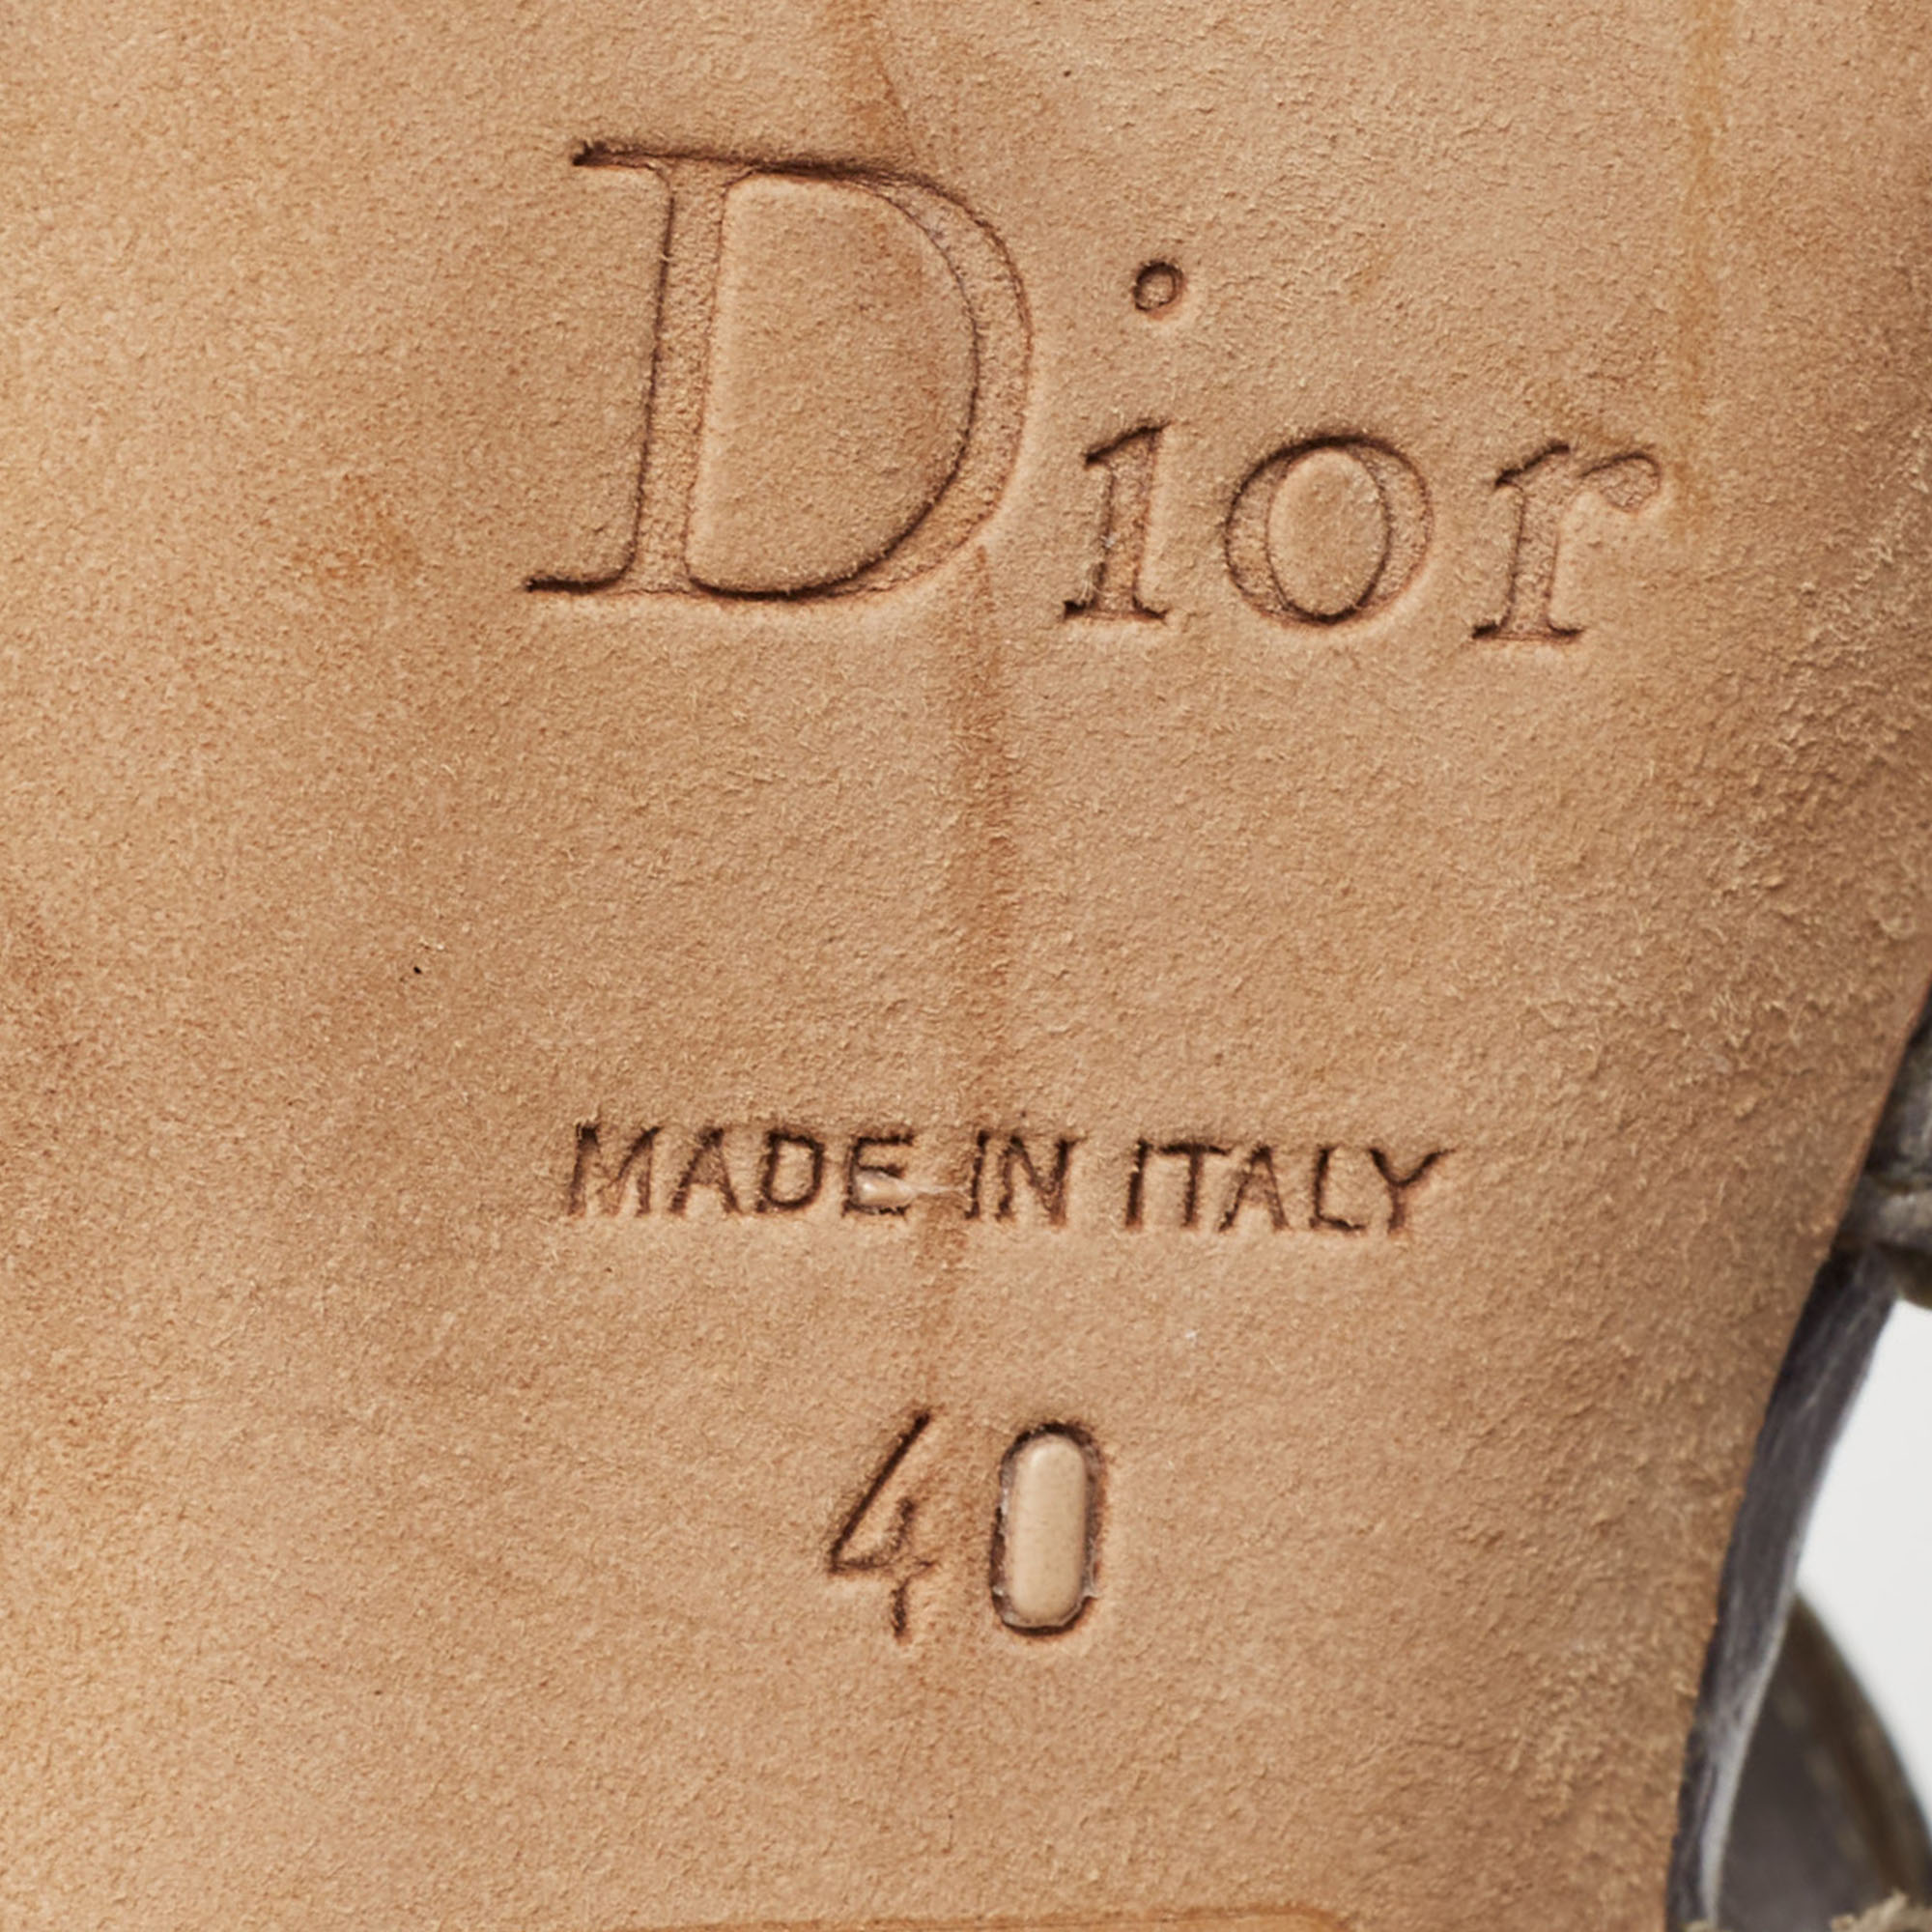 Dior Grey Embossed Croc Strappy Platform Sandals Size 40